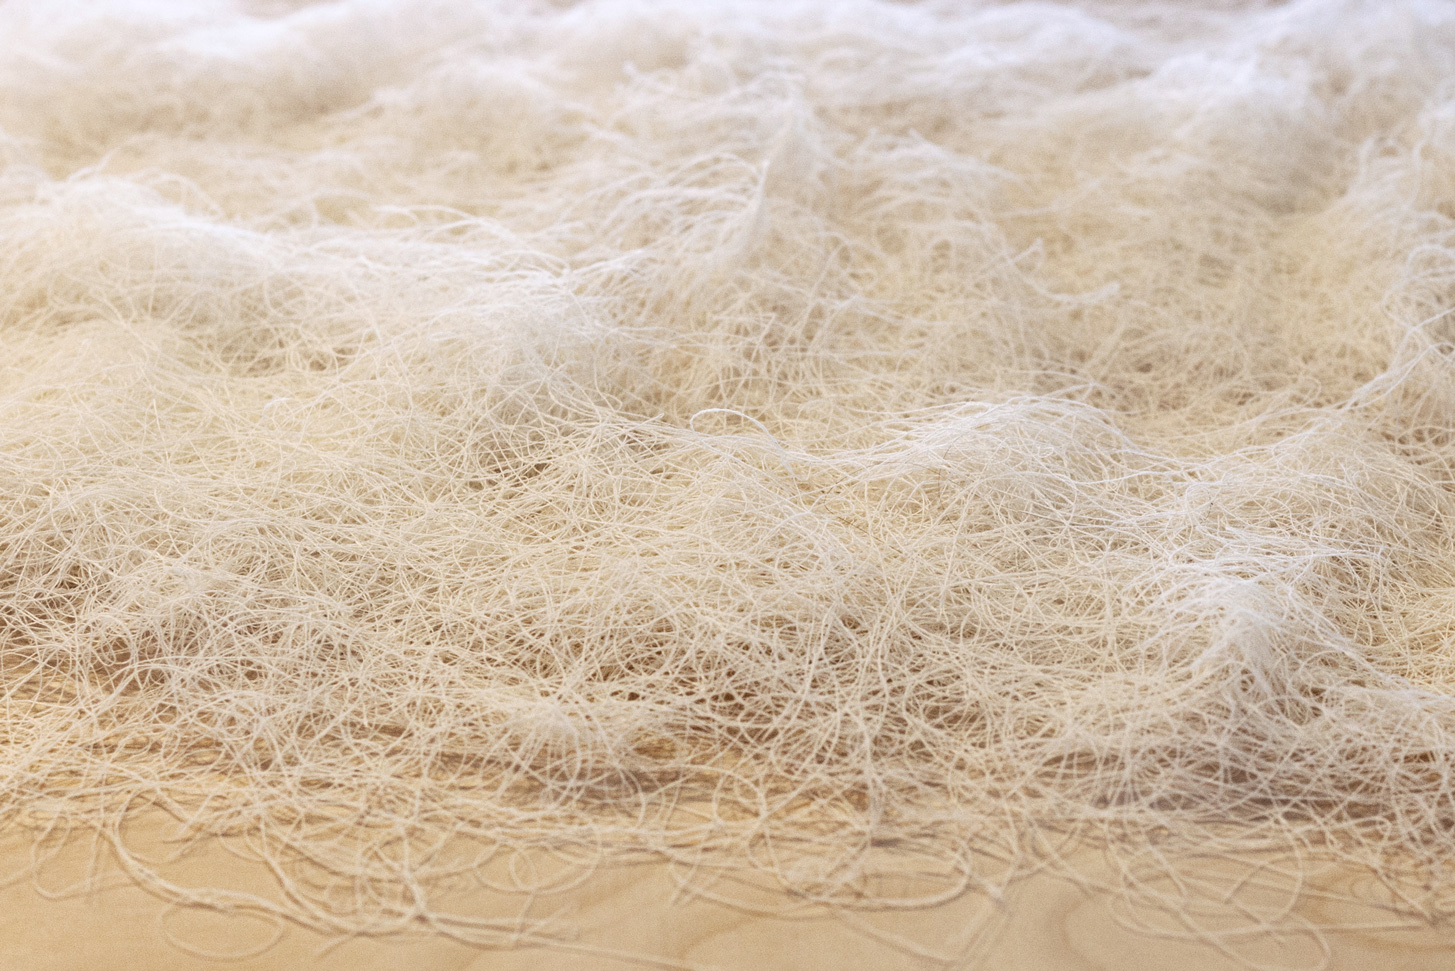  Unwoven cotton threads 